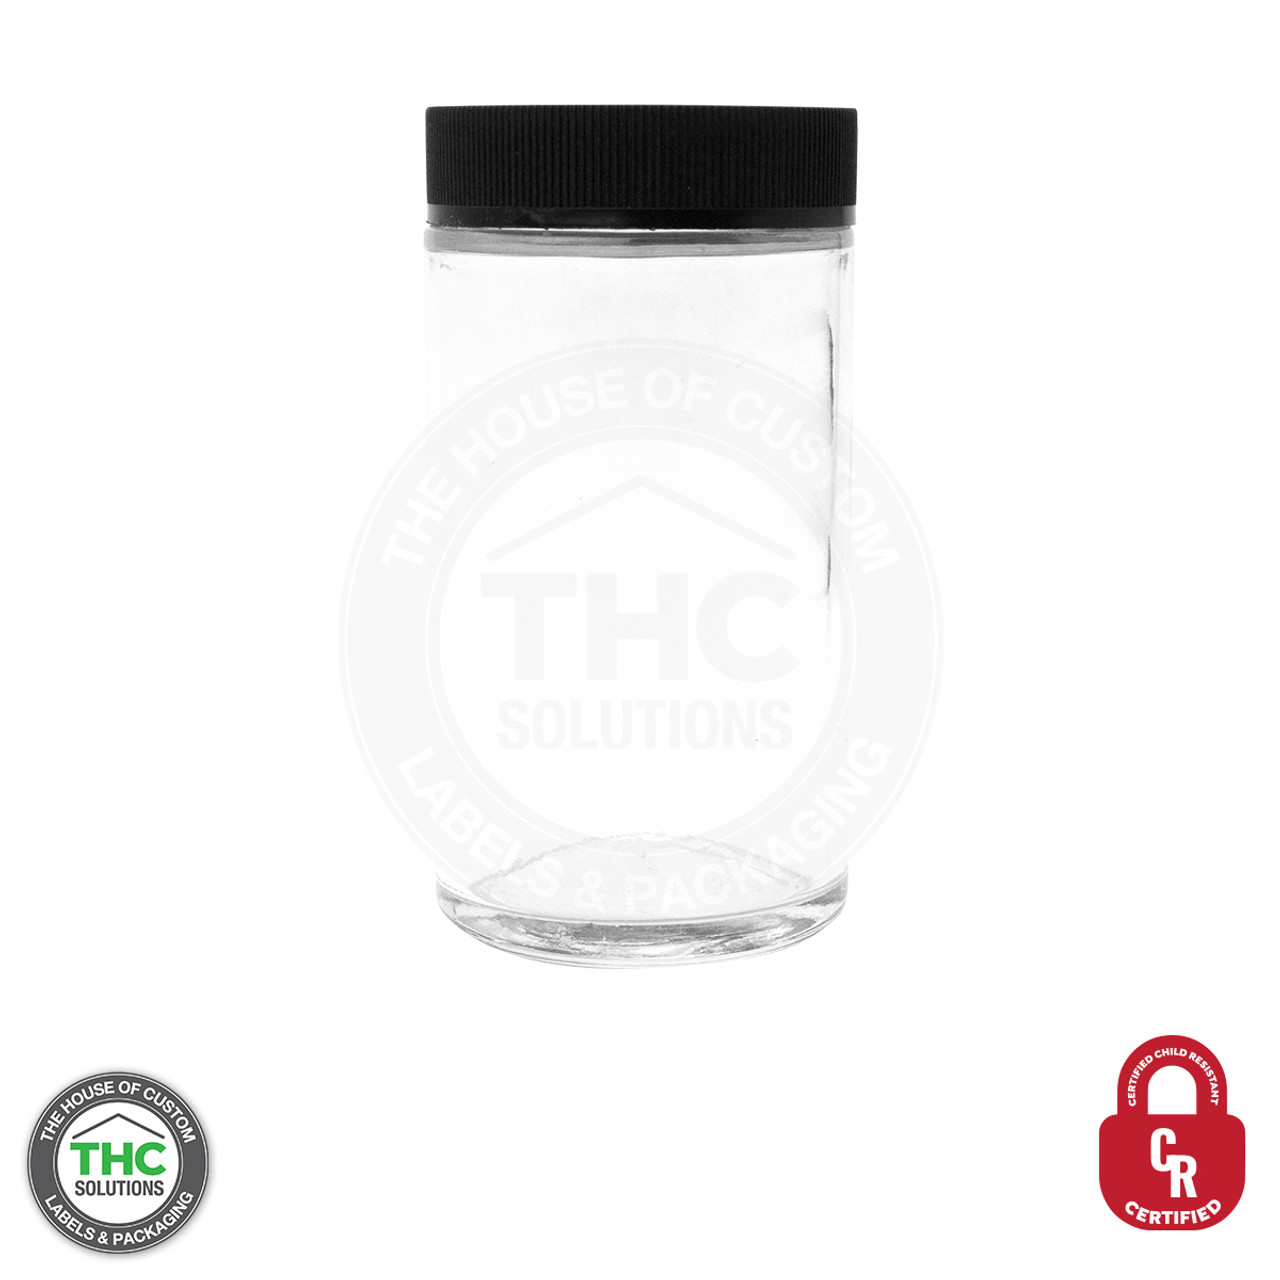 https://cdn11.bigcommerce.com/s-8b9gtia5et/images/stencil/1280x1280/products/541/2540/THCR-8-oz-Child-Resistant-Glass-Jar-black__81376.1610476577.jpg?c=1